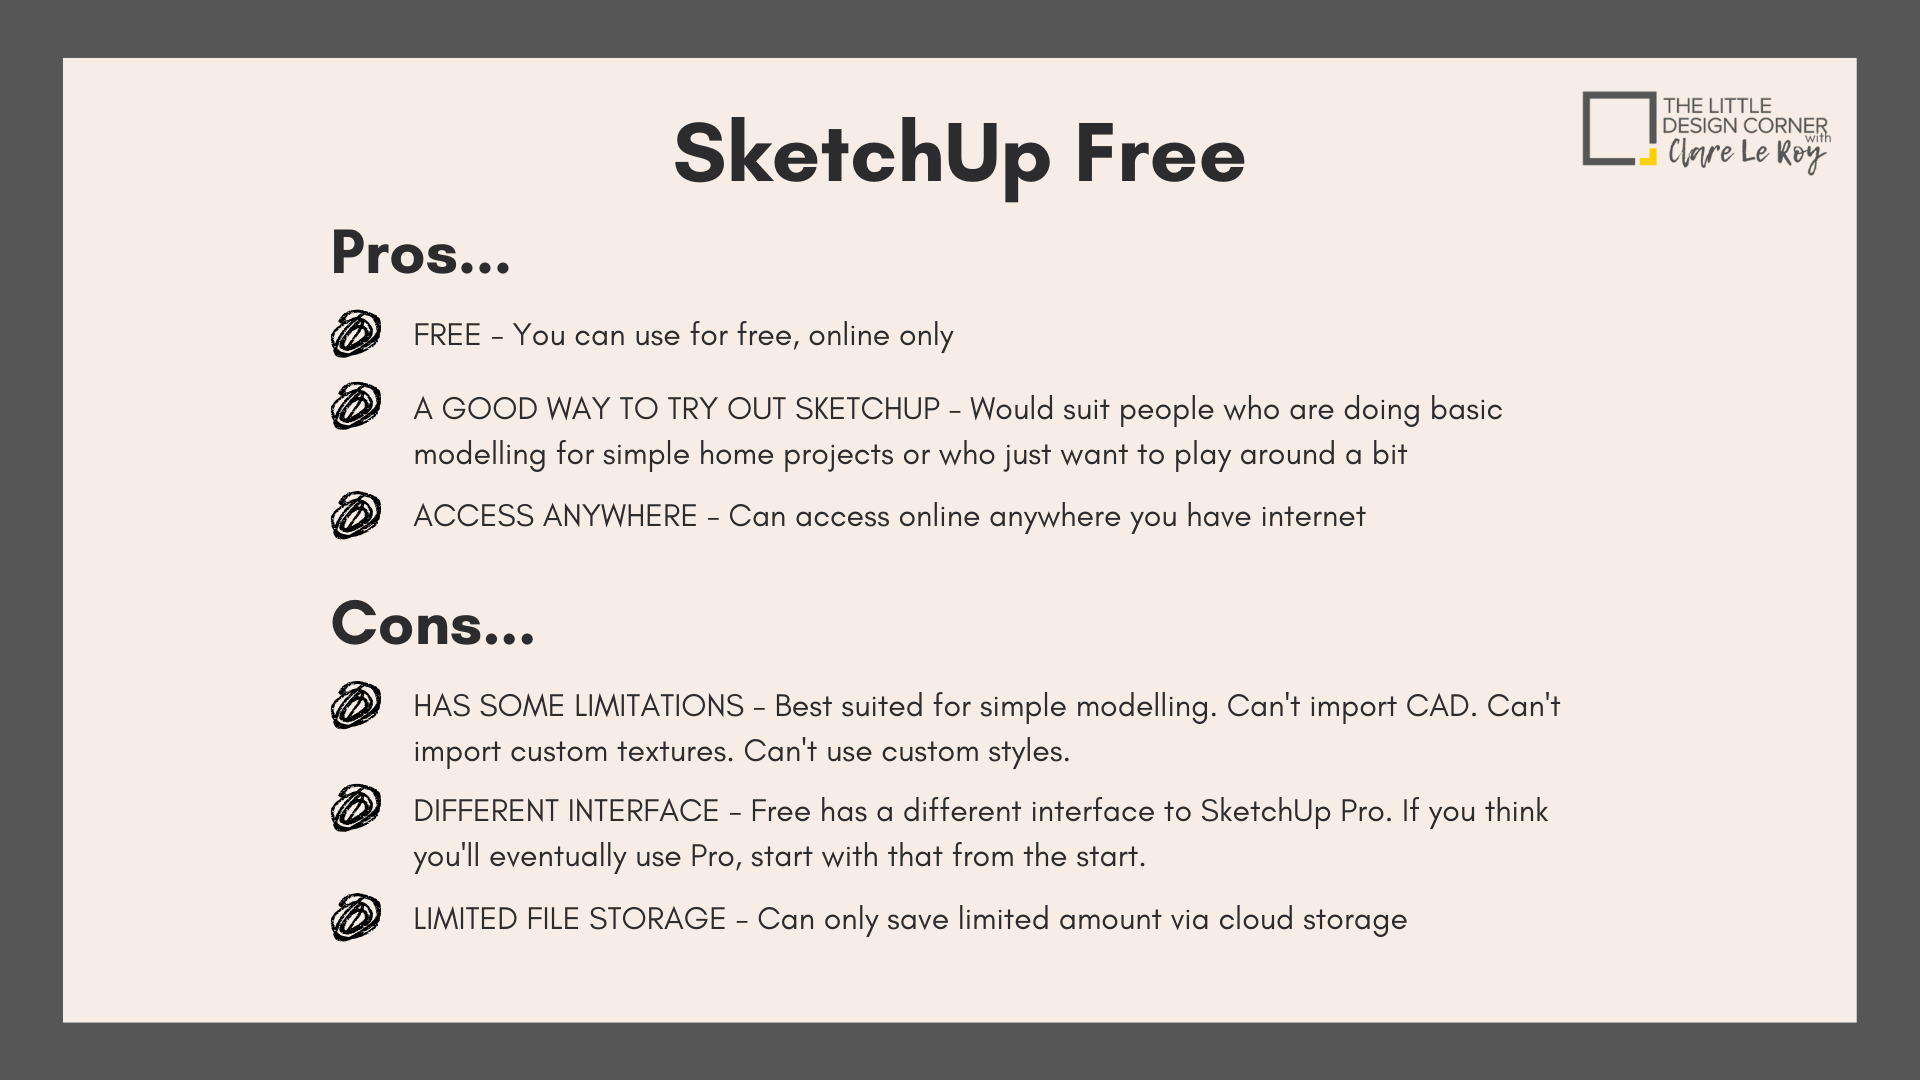 sketchup free version vs pro